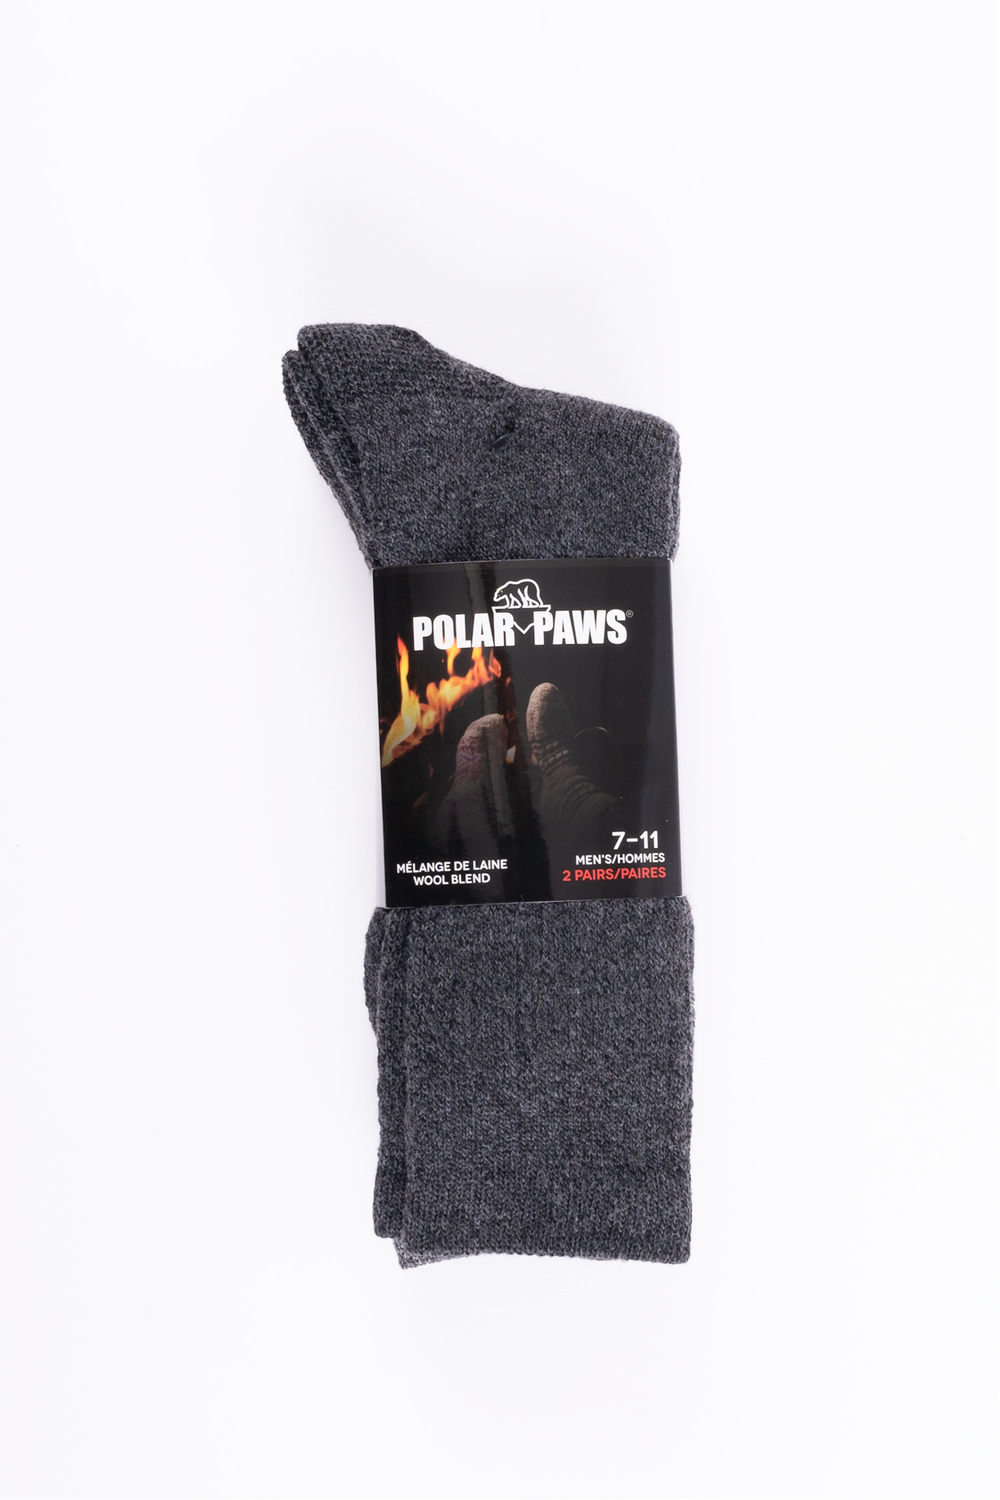 Polar Paws - Wool blend socks - 2 pairs